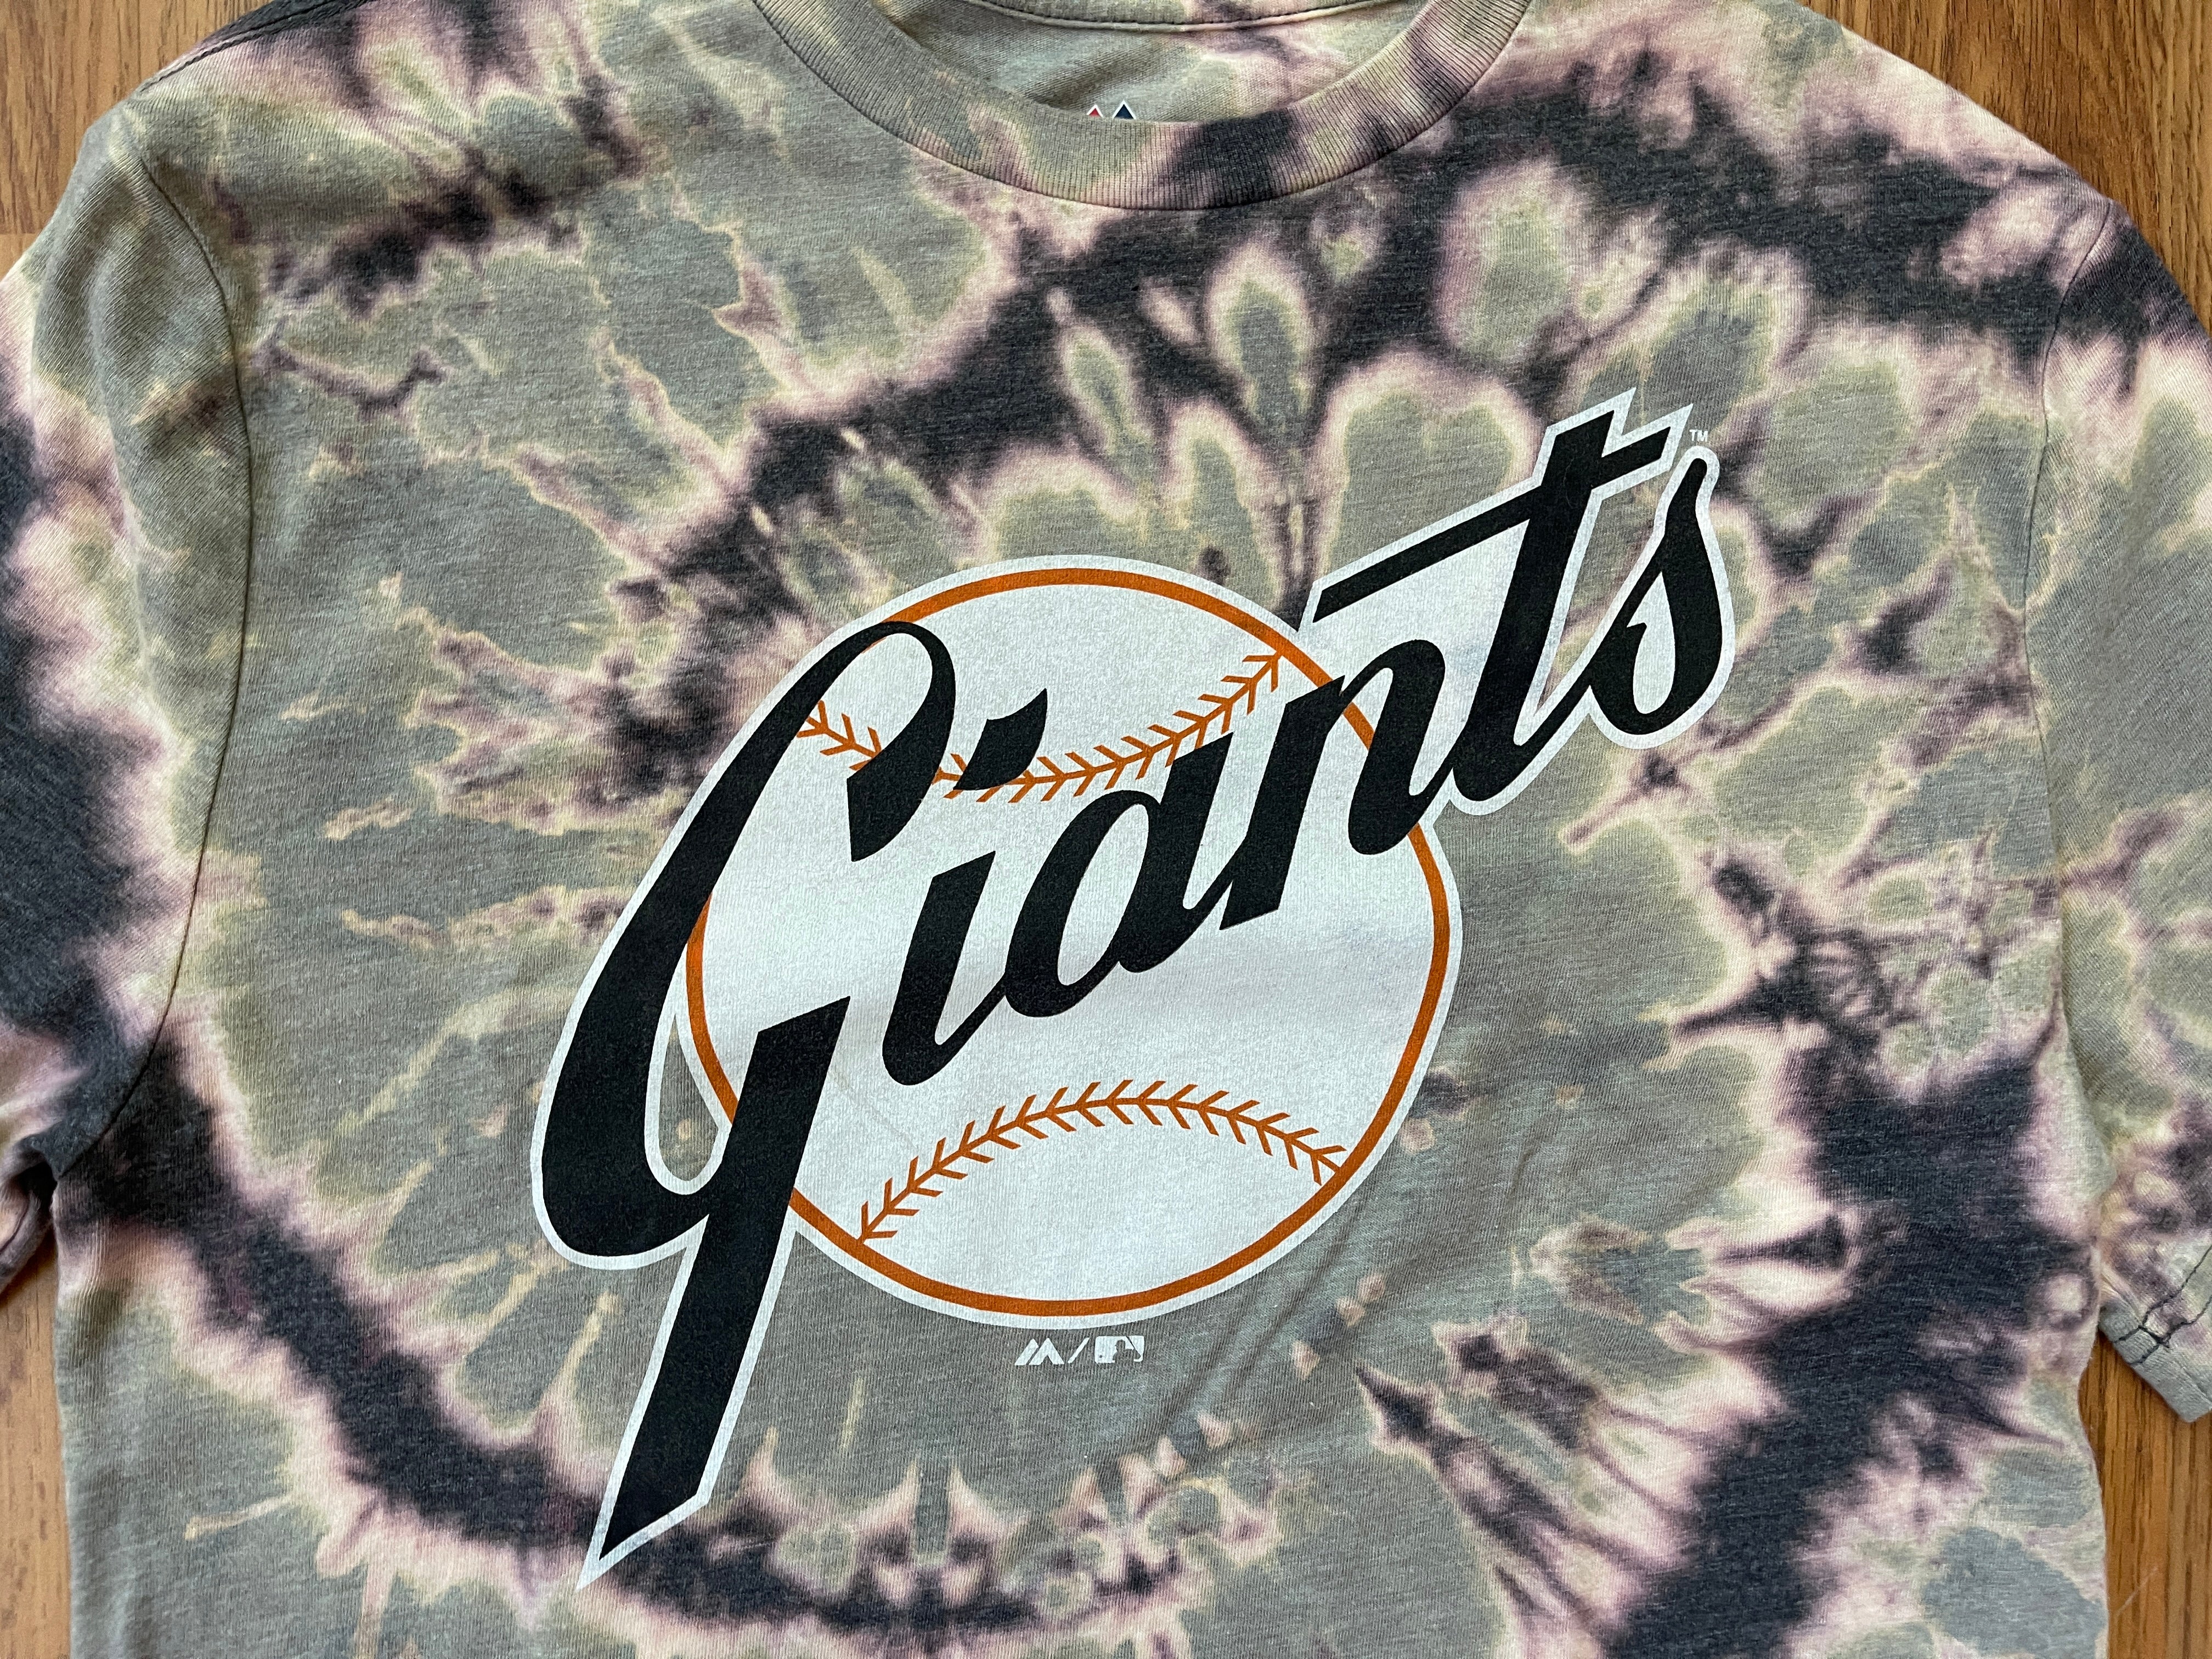 San Francisco Giants MLB BASEBALL SUPER AWESOME REVERSE TIE DYE Sz Small T  Shirt